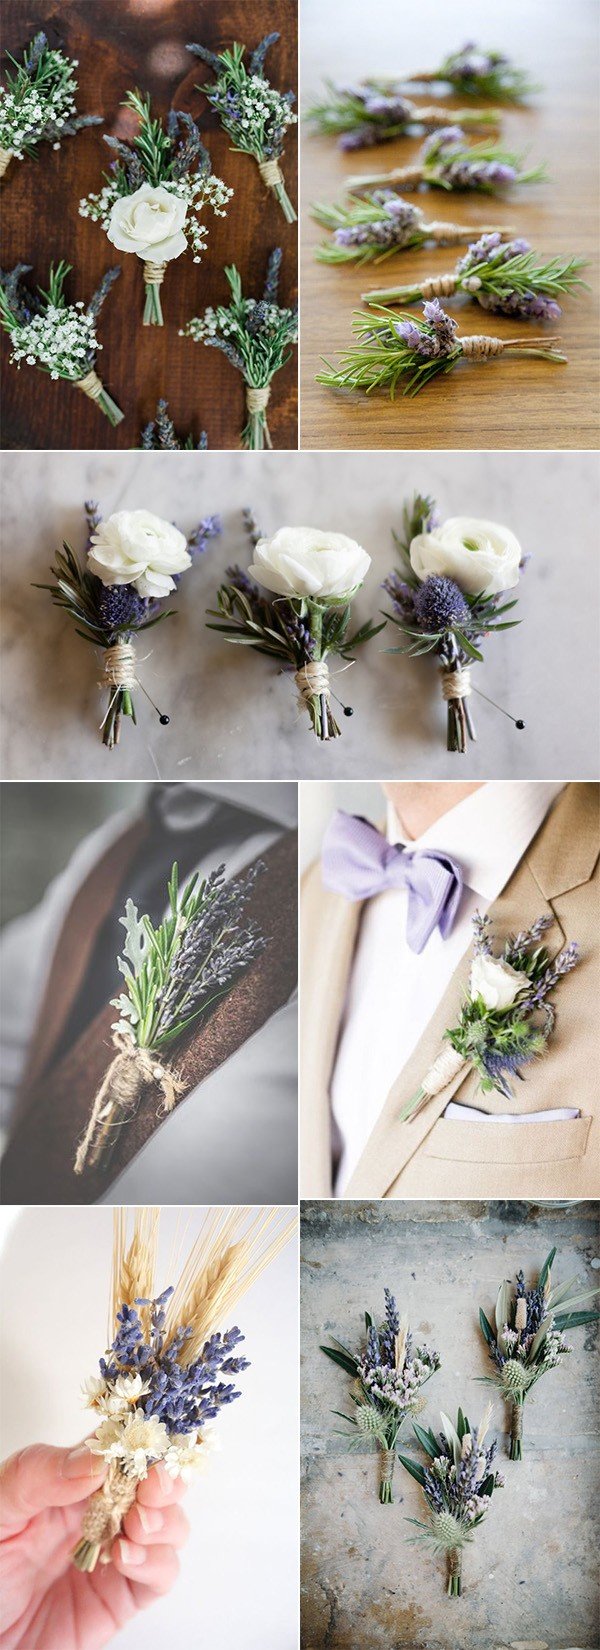 Lavender themed wedding boutonniere ideas